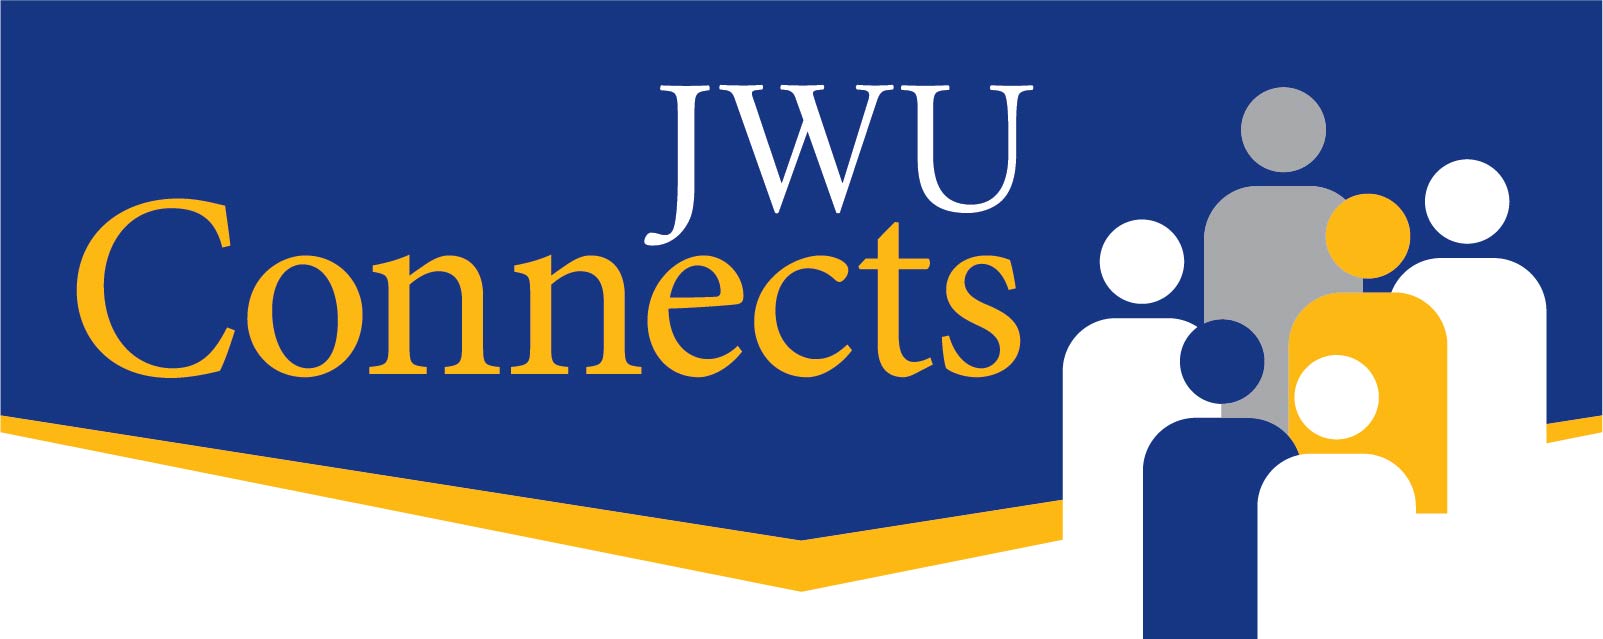 JWU Connects masthead